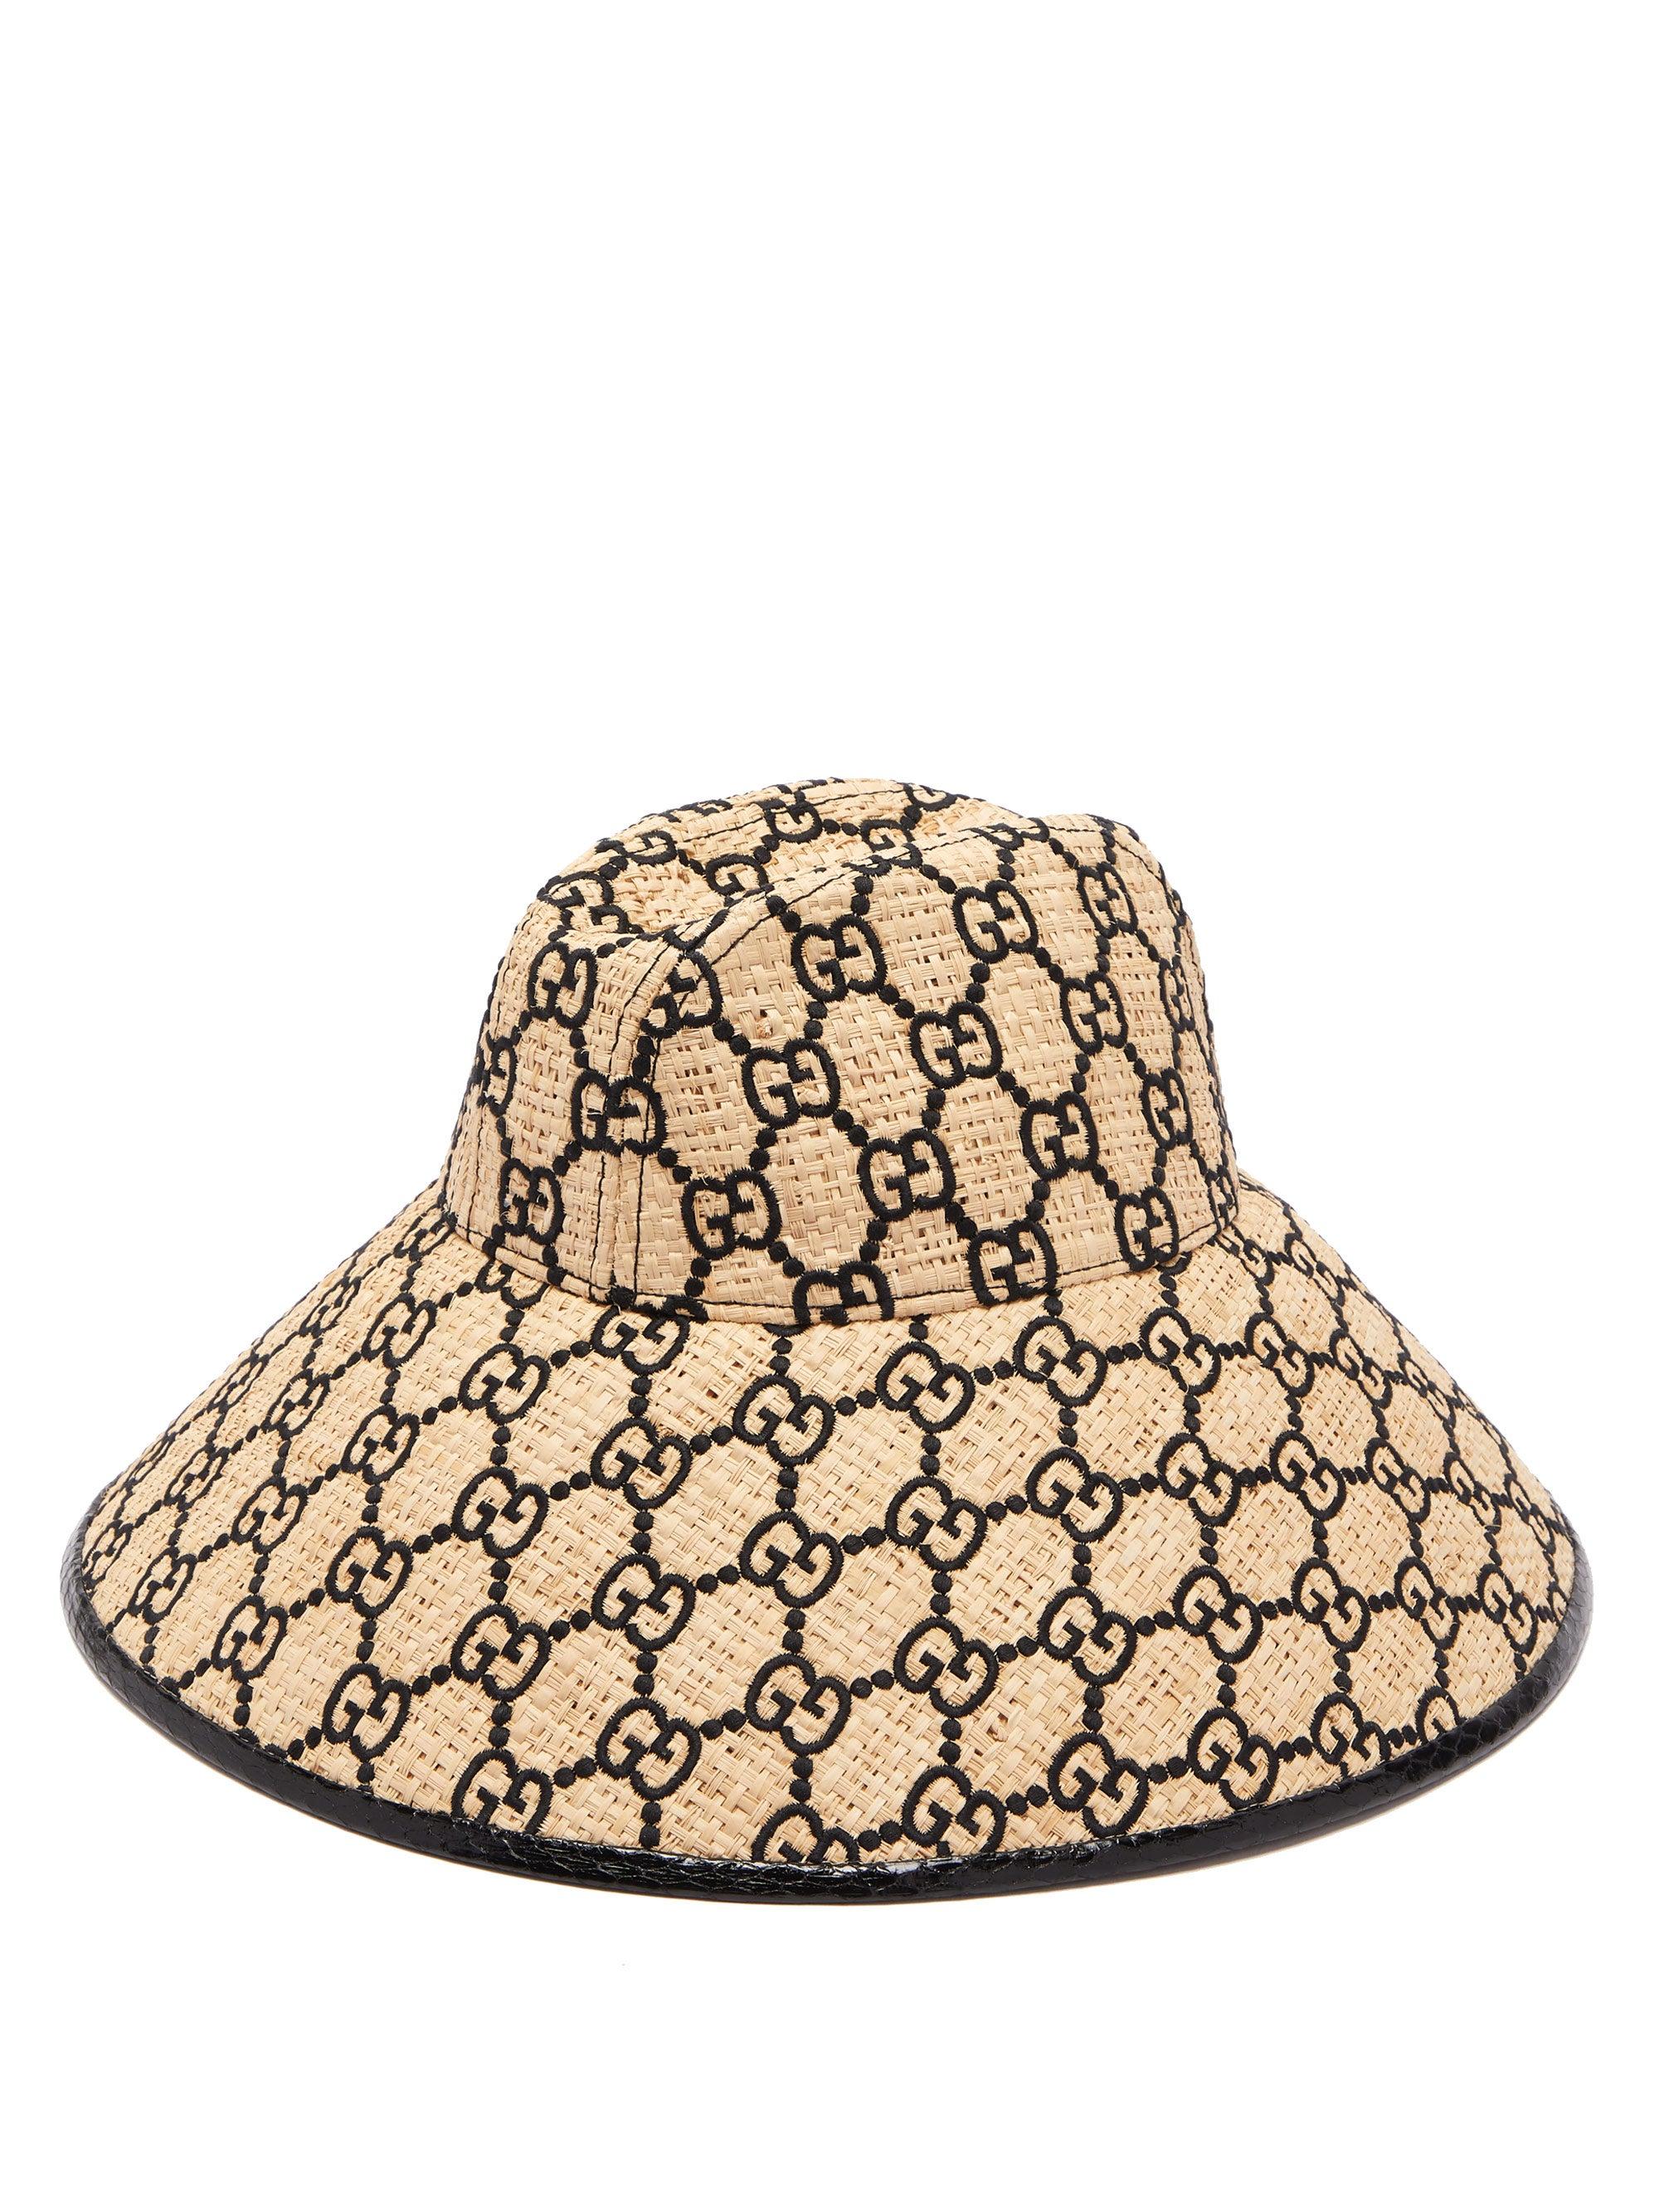 Gucci Black Gg Supreme Bucket Hat, $530, SSENSE